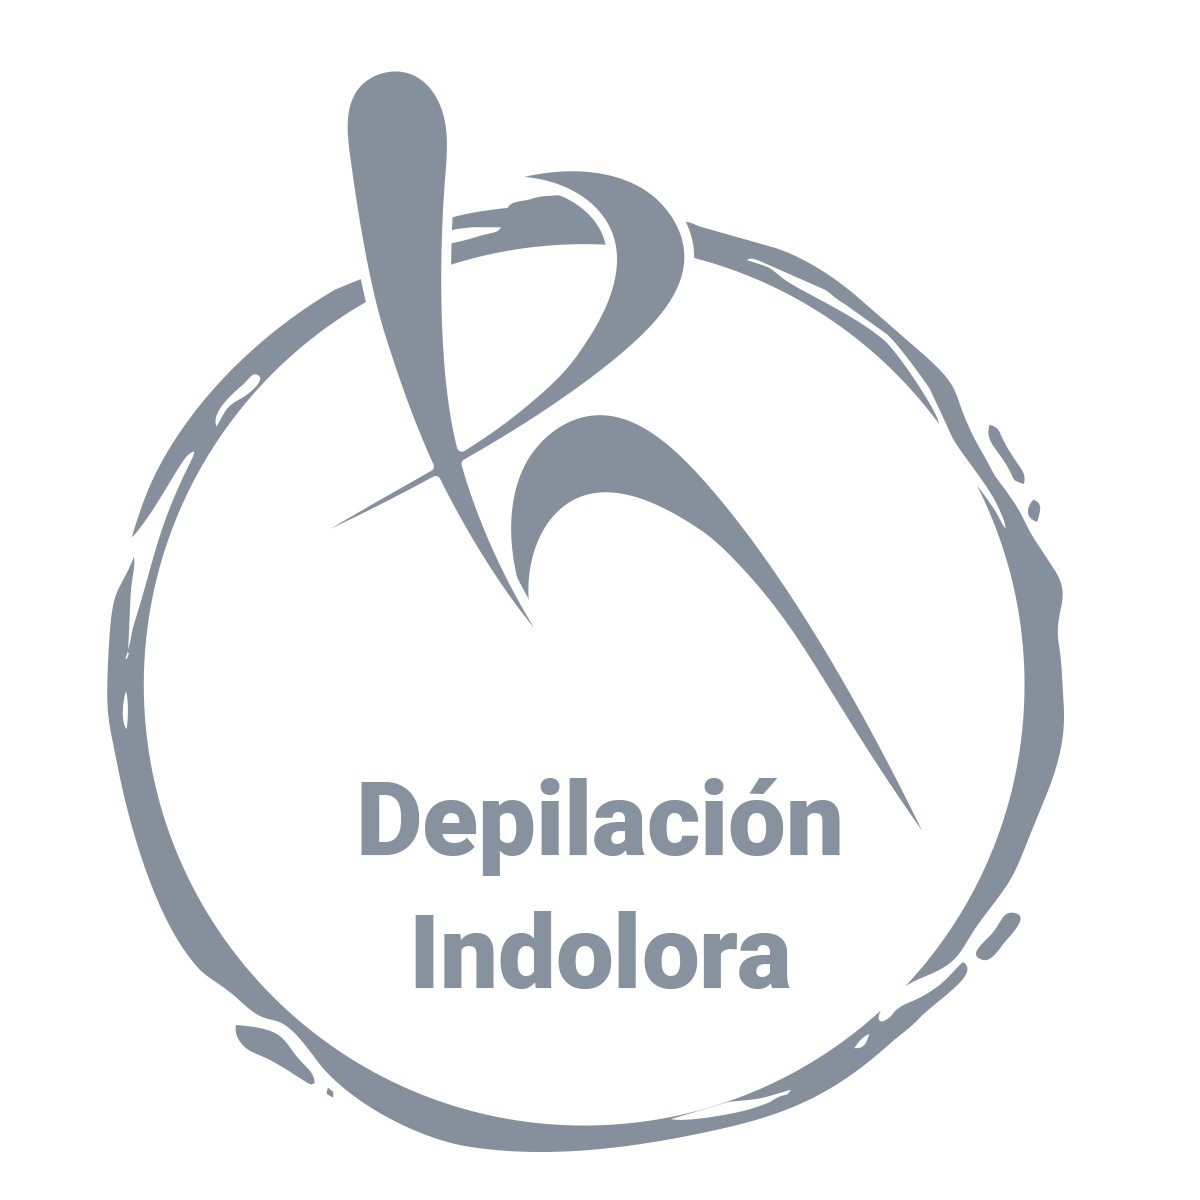 Centros de Depilación Láser SHR Reme Aguilar en Murcia y Molina de Segura - Depilación Segura